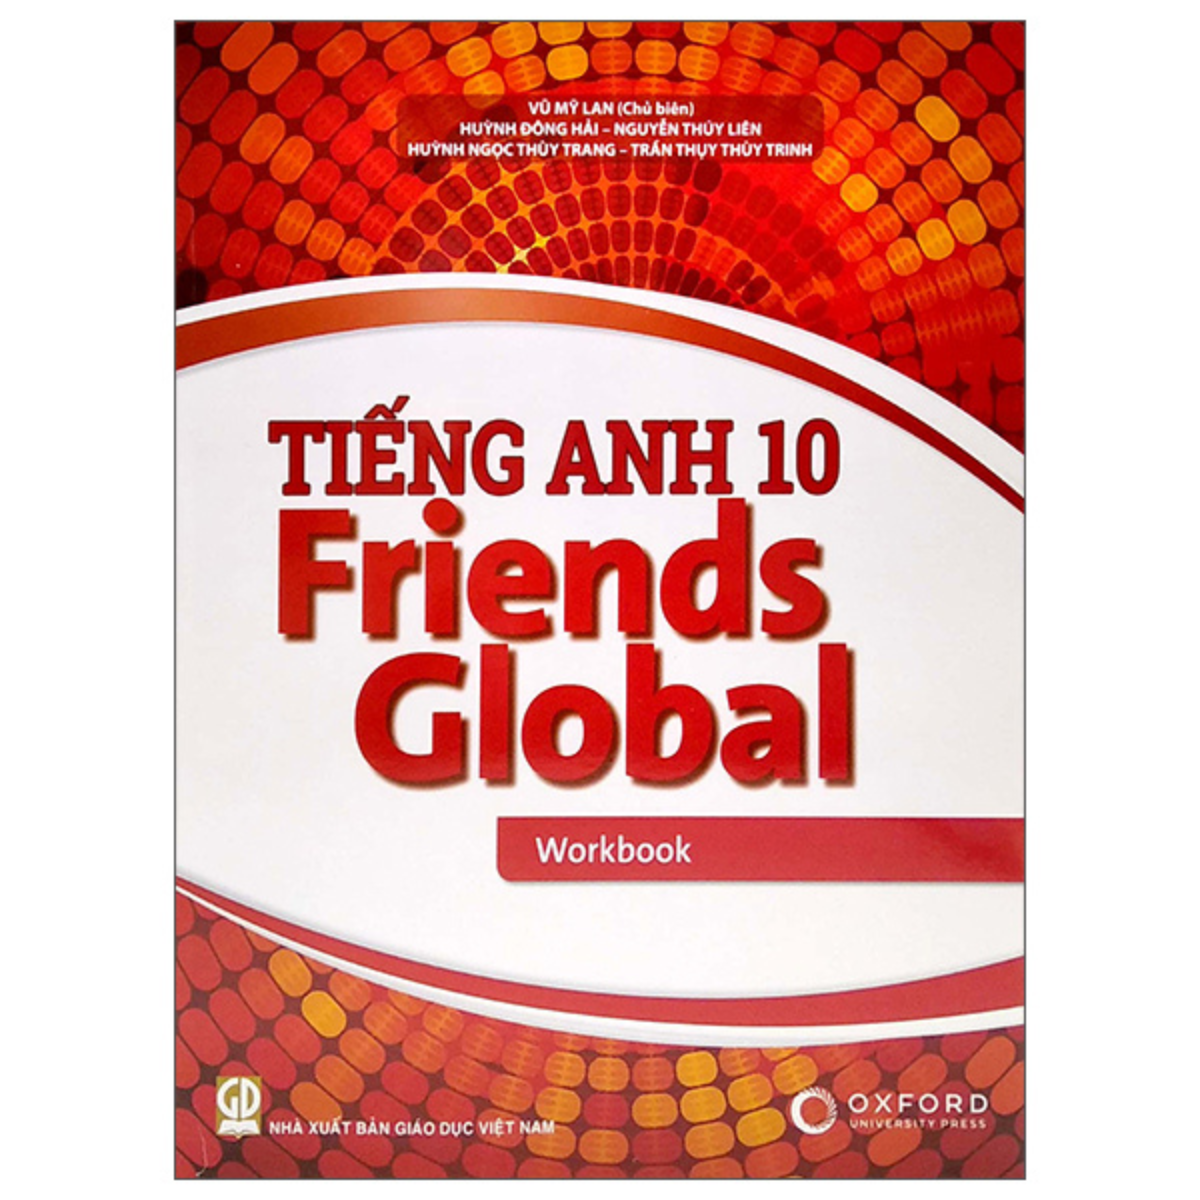 Tiếng Anh 10 Friends Global - Workbook